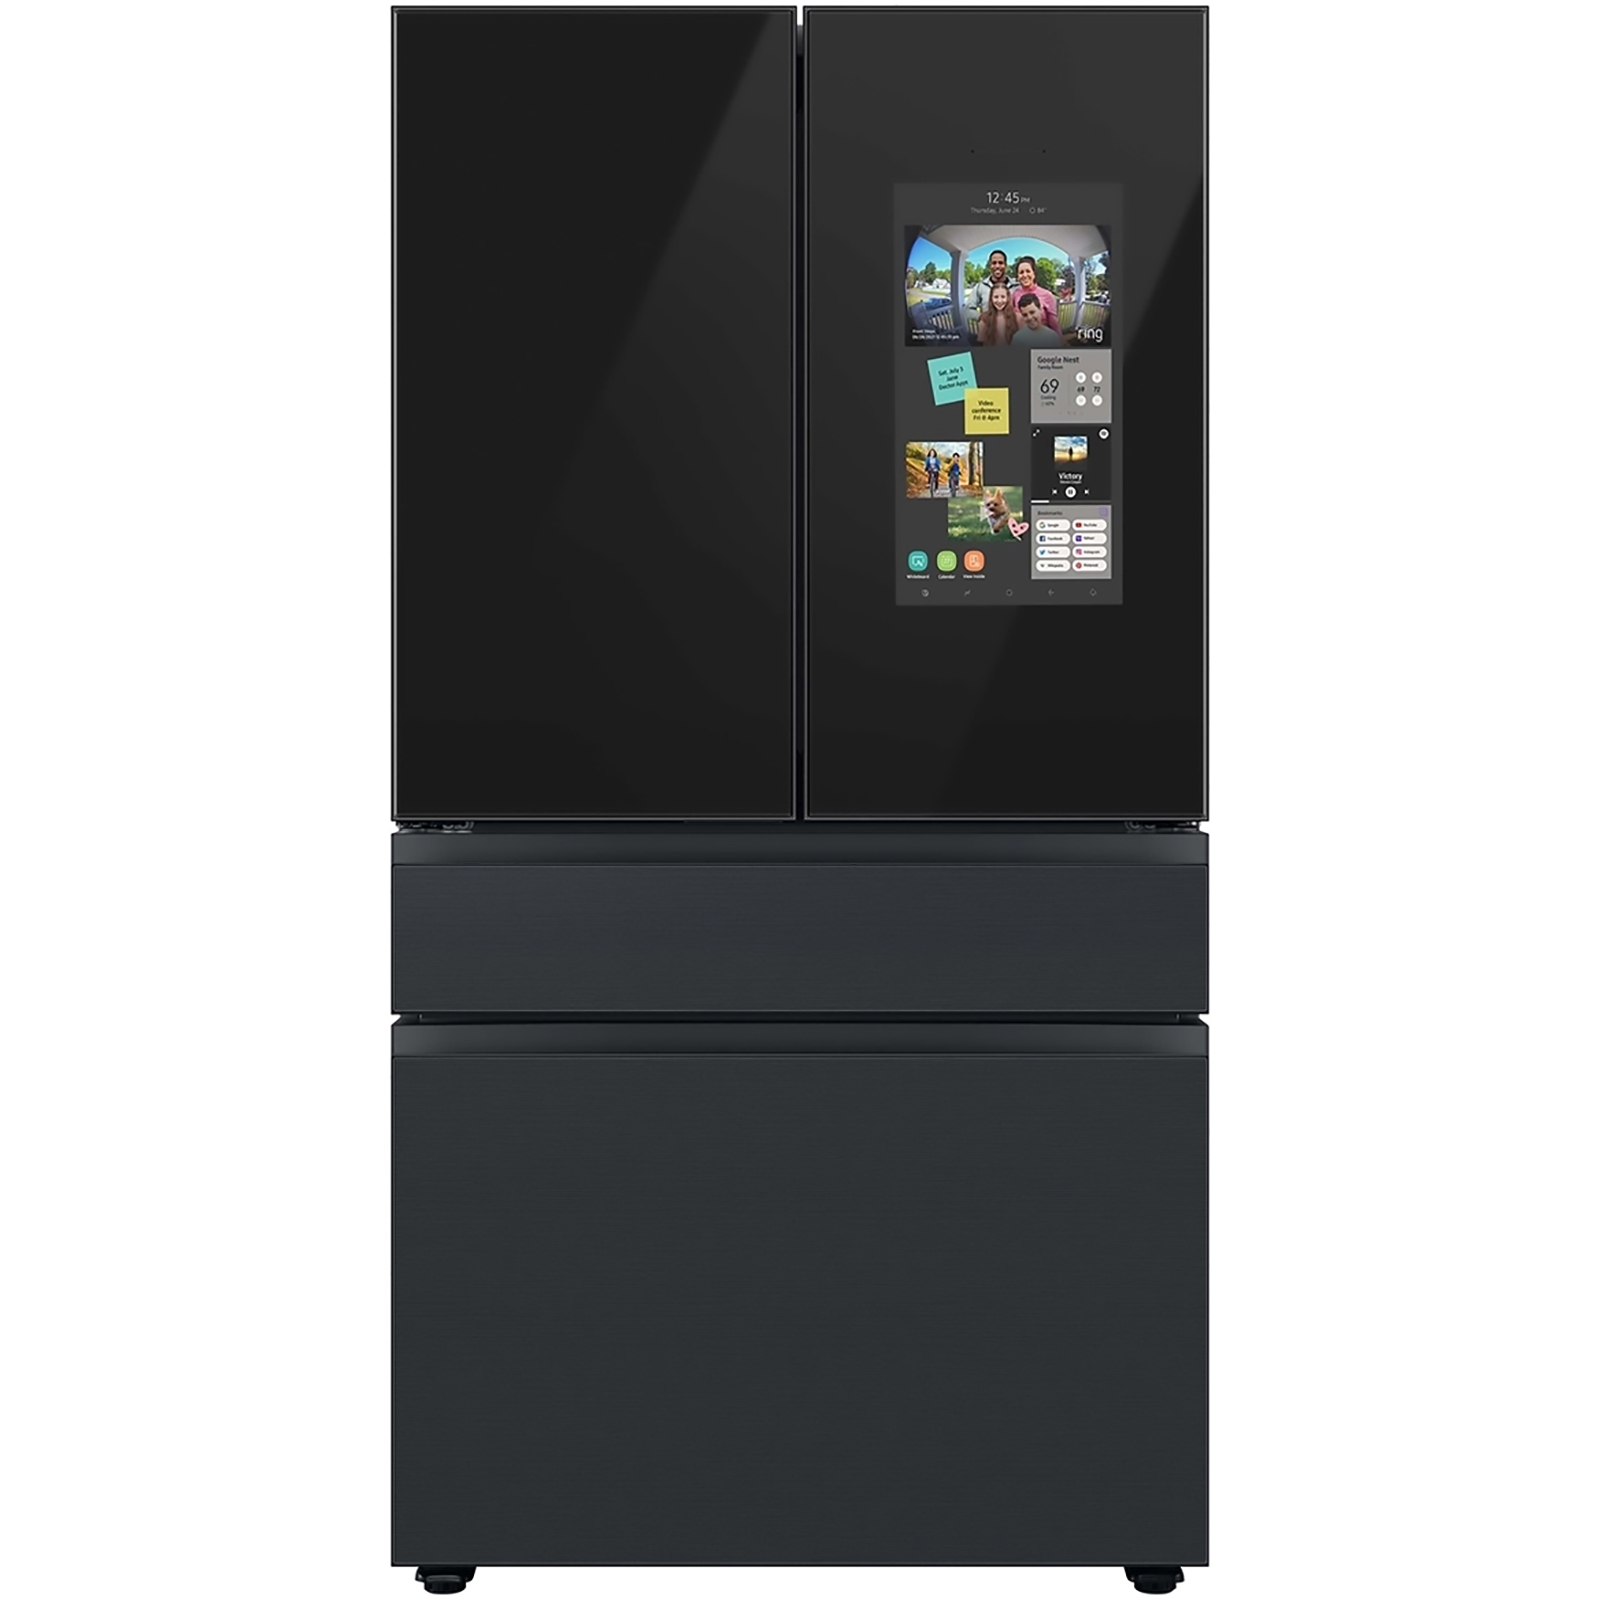 Samsung RF23BB89008MAA Bespoke 23cu.ft. 4-Door French Refrigerator